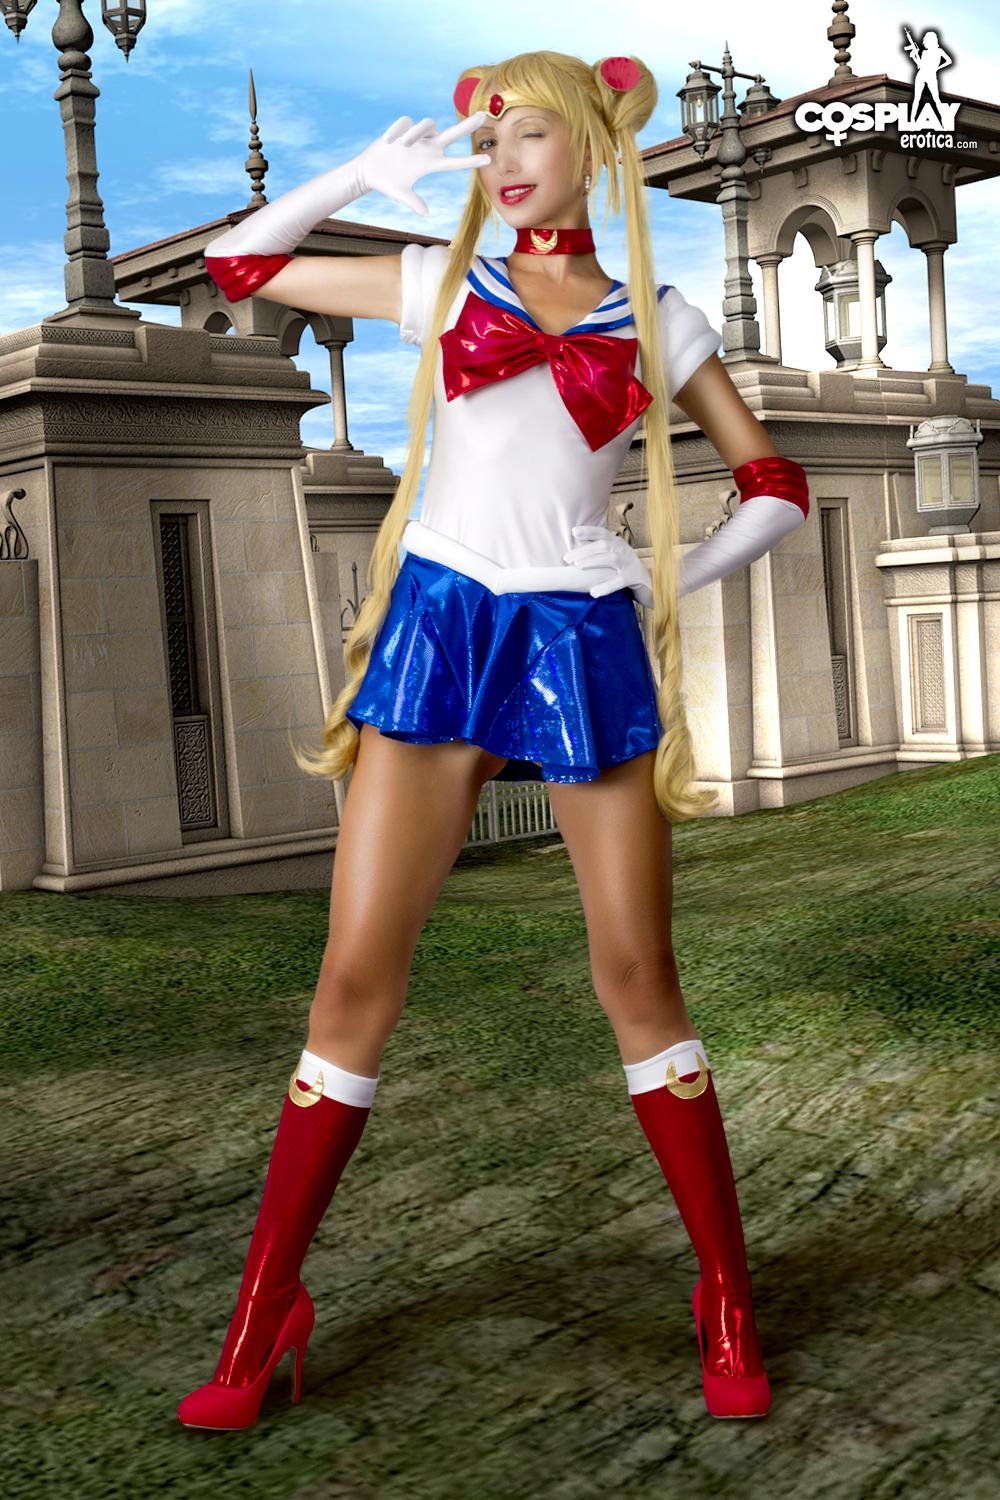 La modelo rubia de cosplay angela se viste de sailor moon
 #53179891